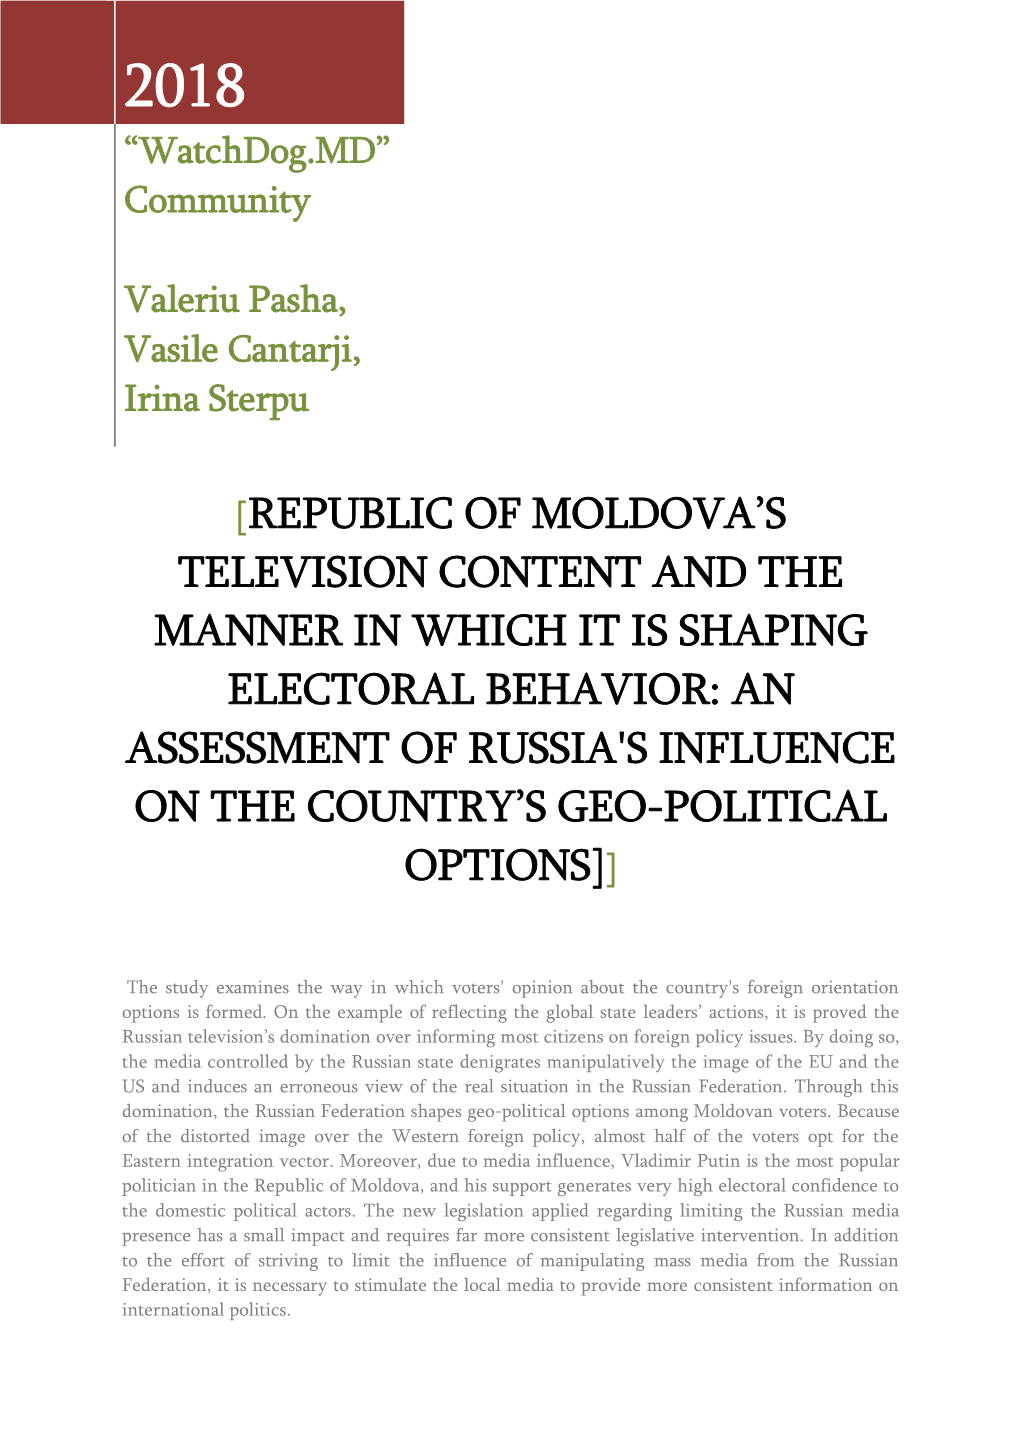 Republic of Moldova's Television Content and The